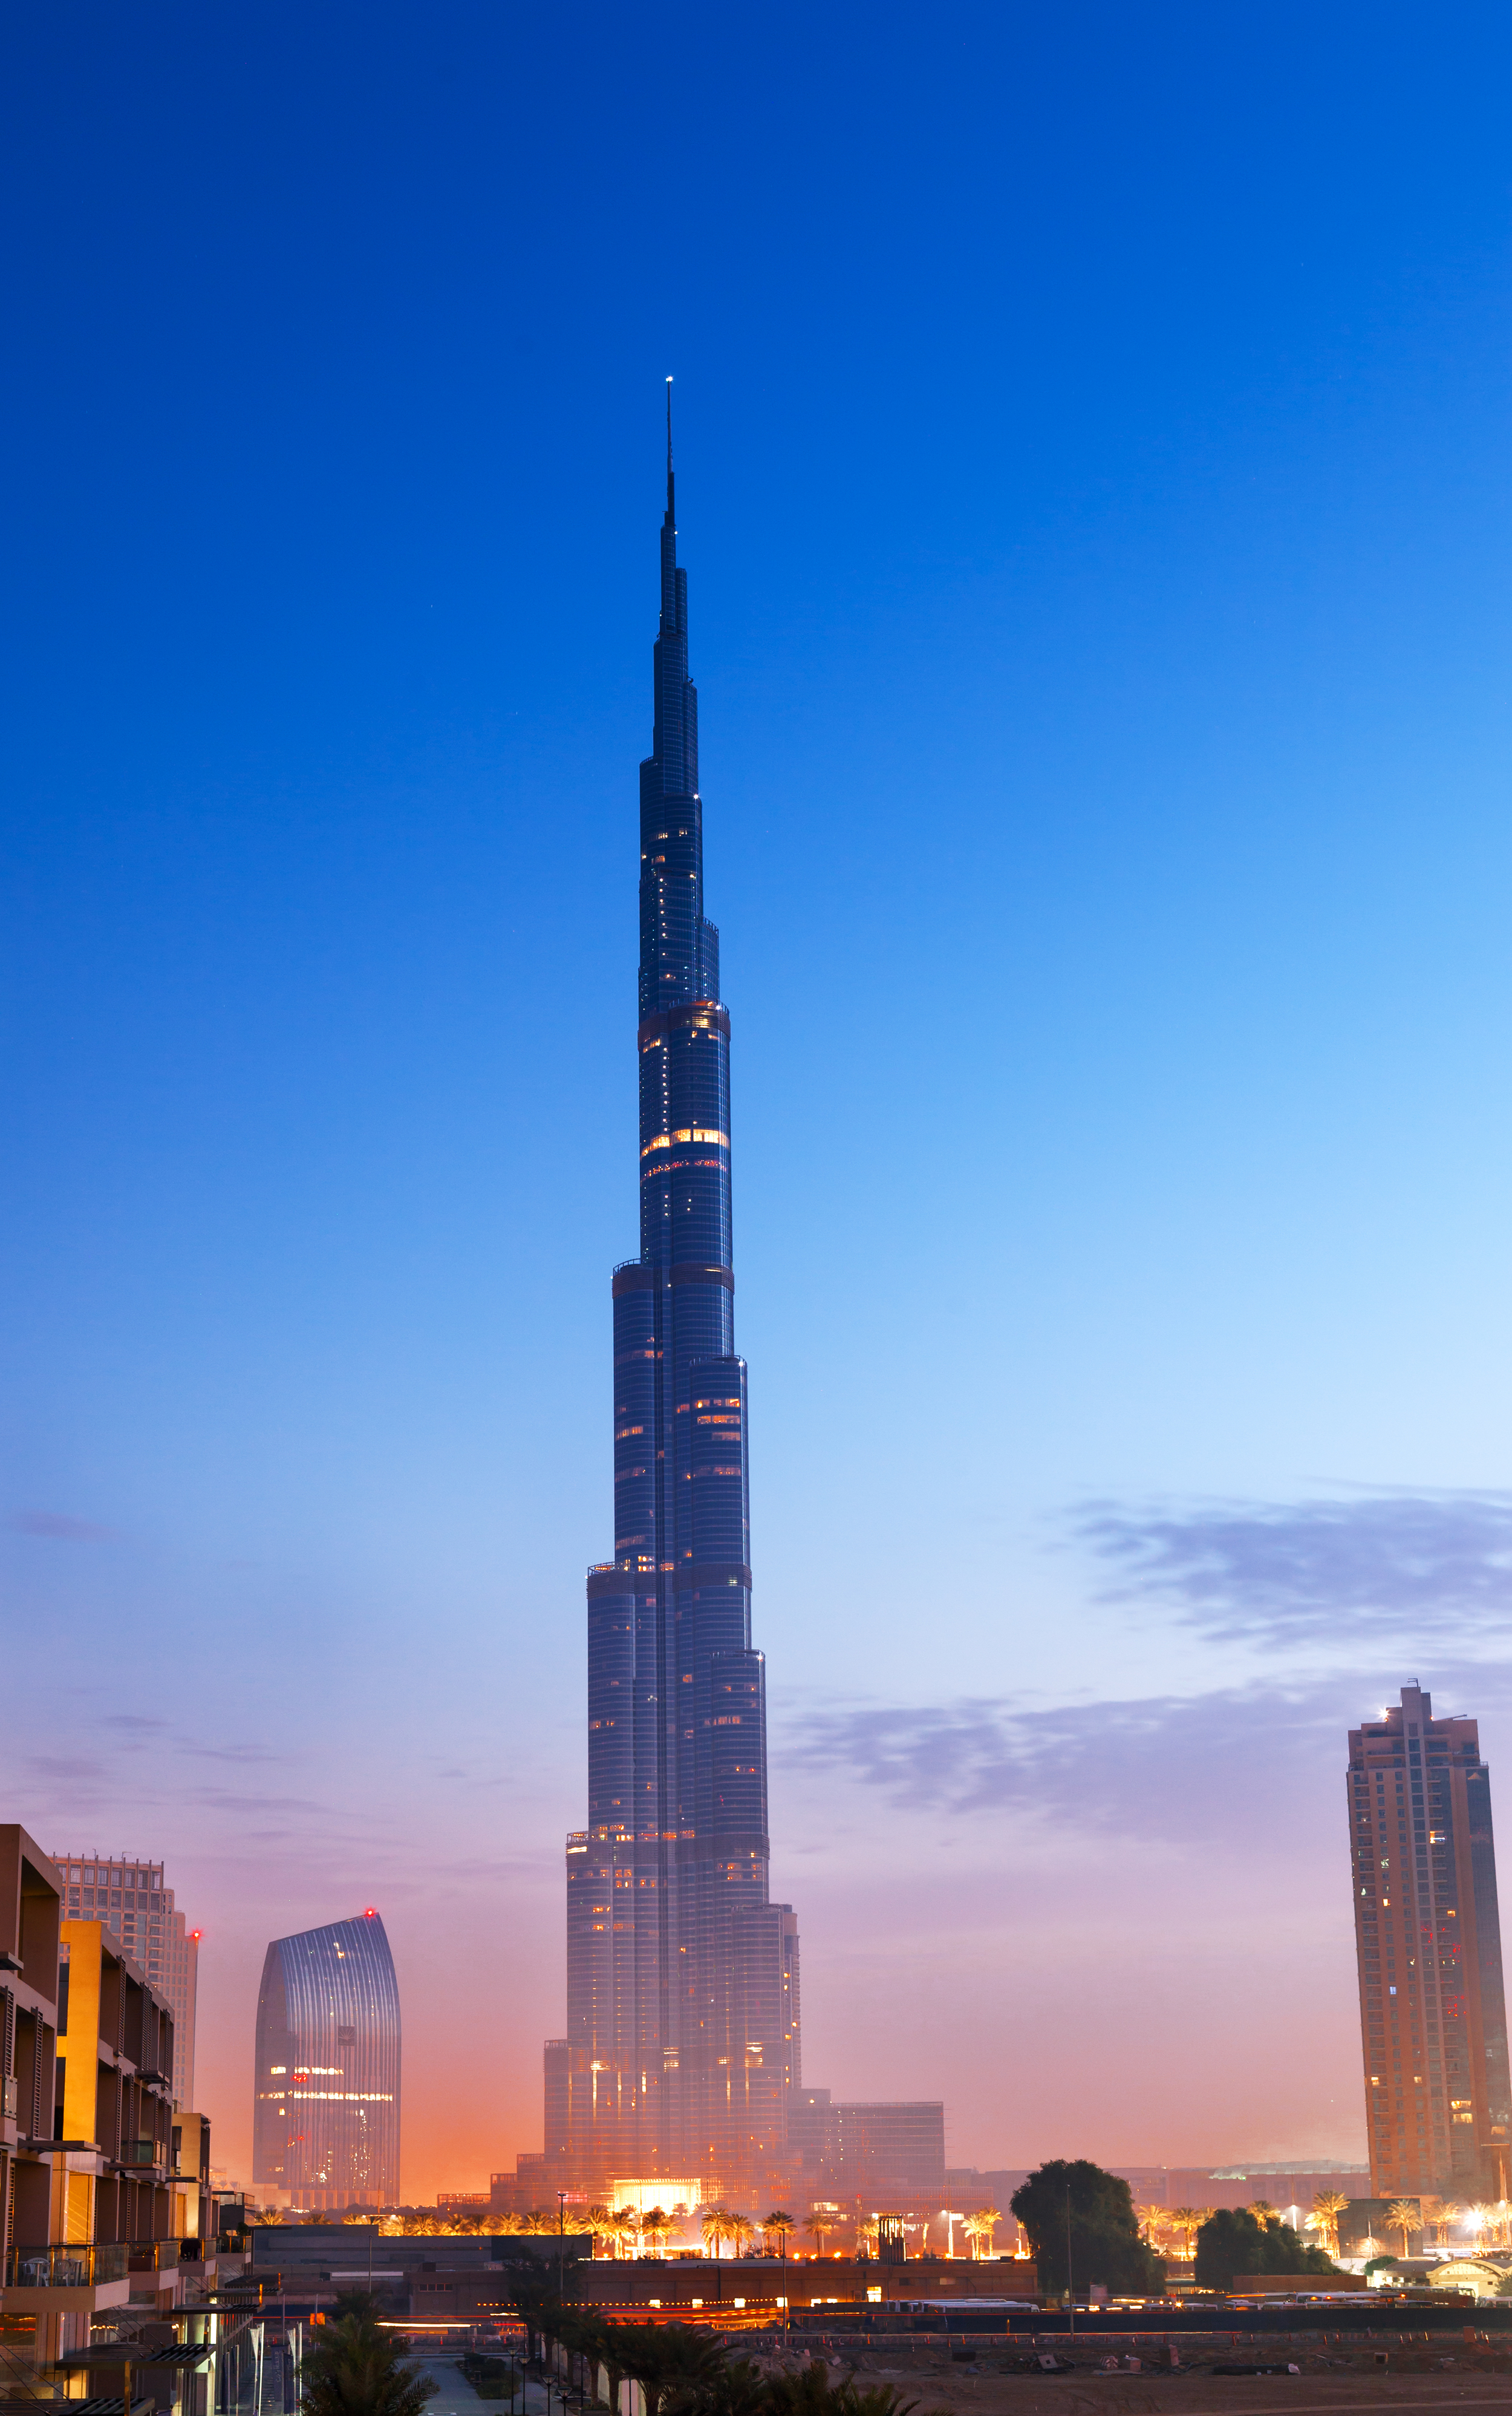 The way of the future? The Burj Khalifa in Dubai